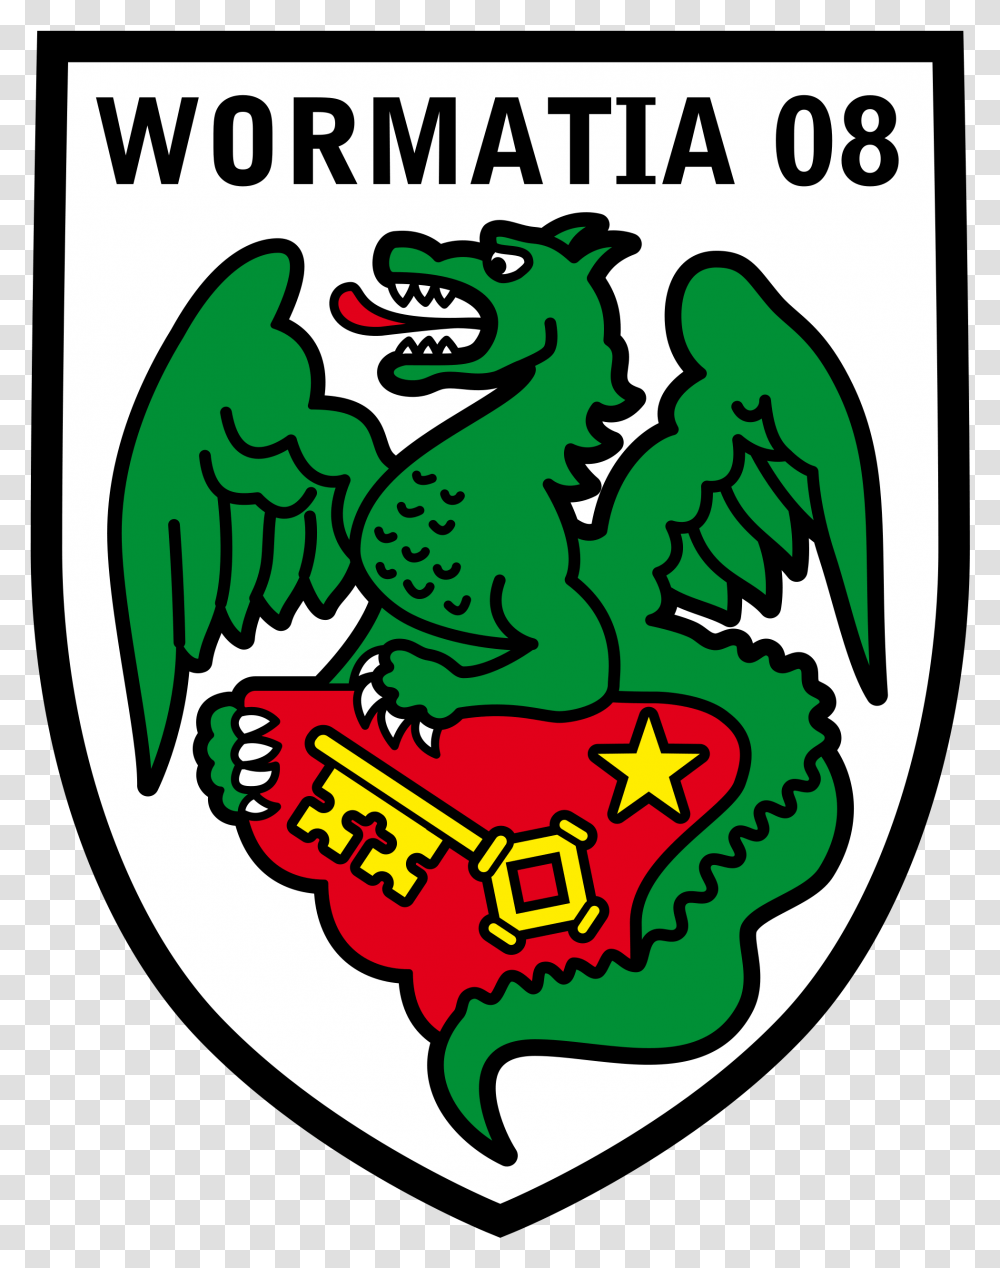 Wormatia 08 Logo 2008 Wormatia Worms Twitter, Dragon Transparent Png